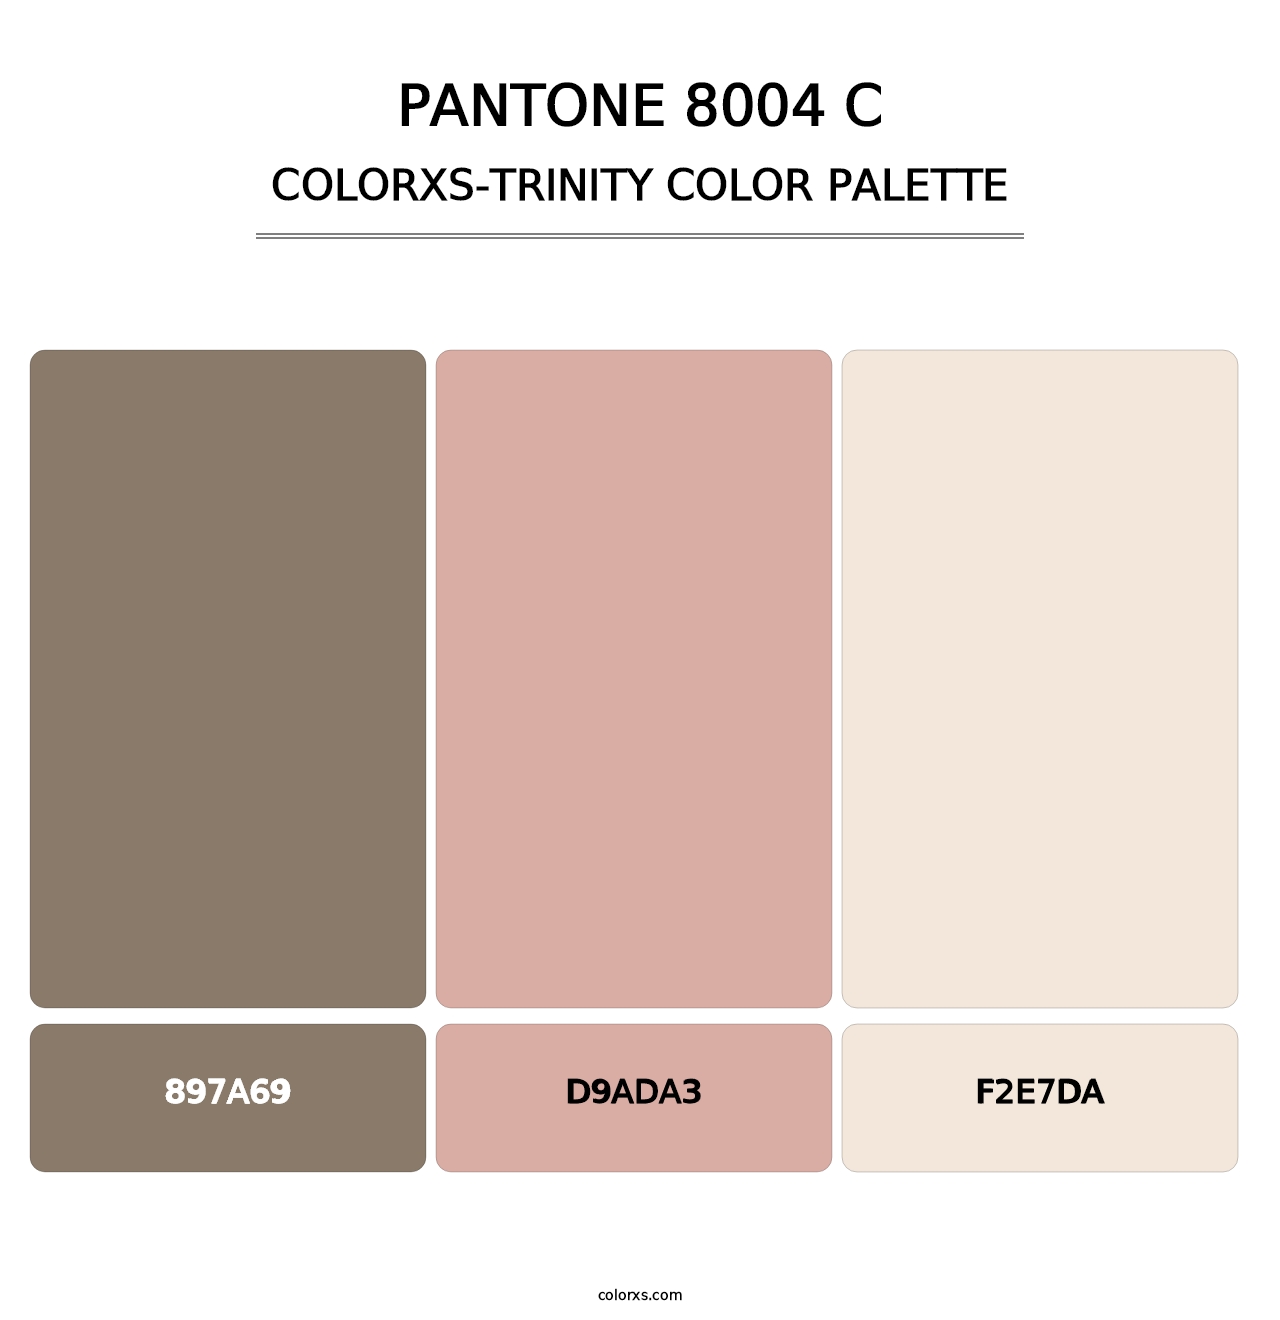 PANTONE 8004 C - Colorxs Trinity Palette